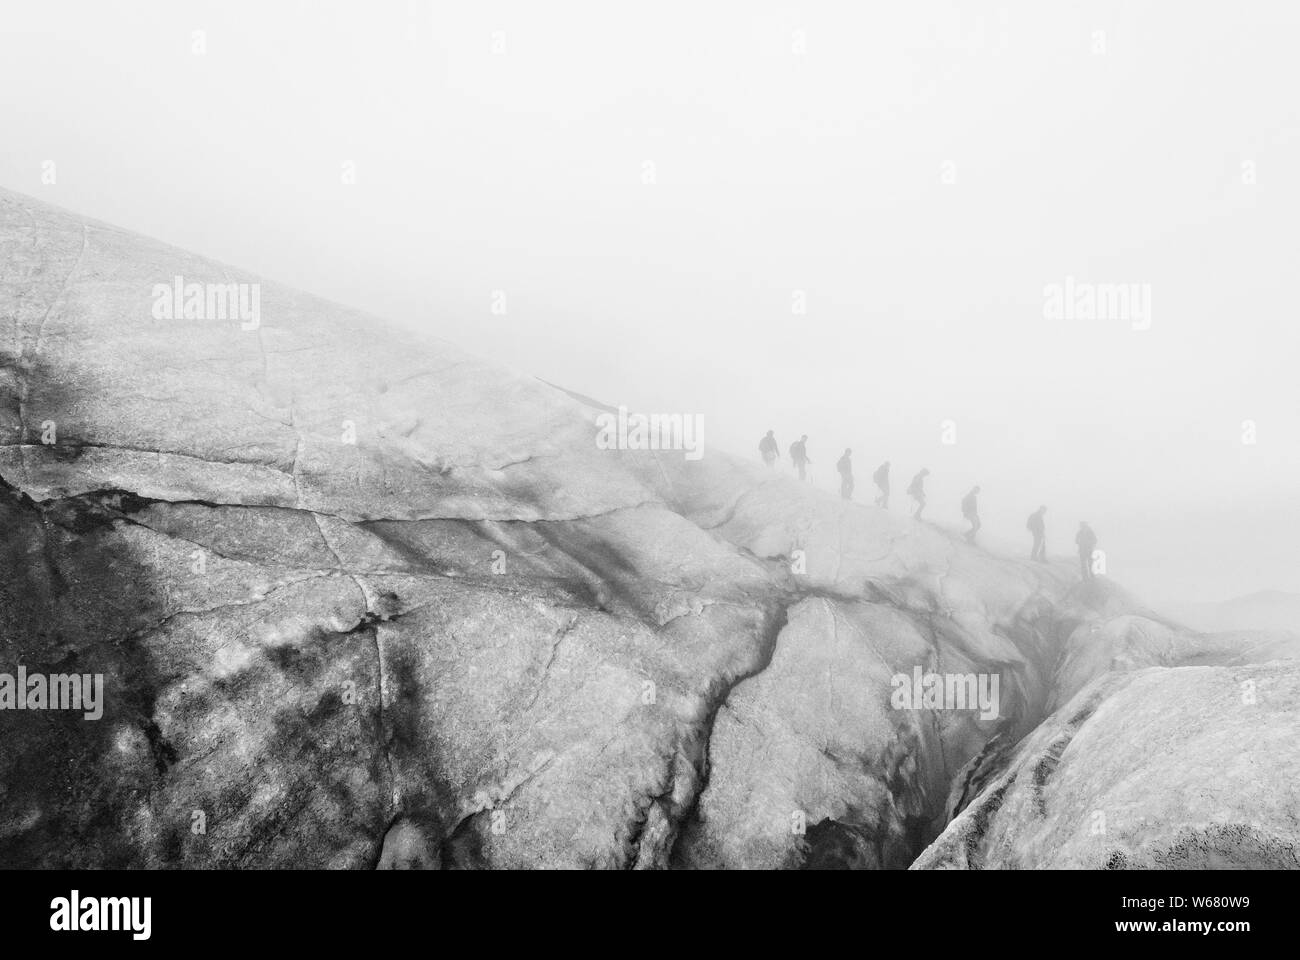 Shadow People hiking, walking through the fog at Vatnajokull, Iceland Stock Photo